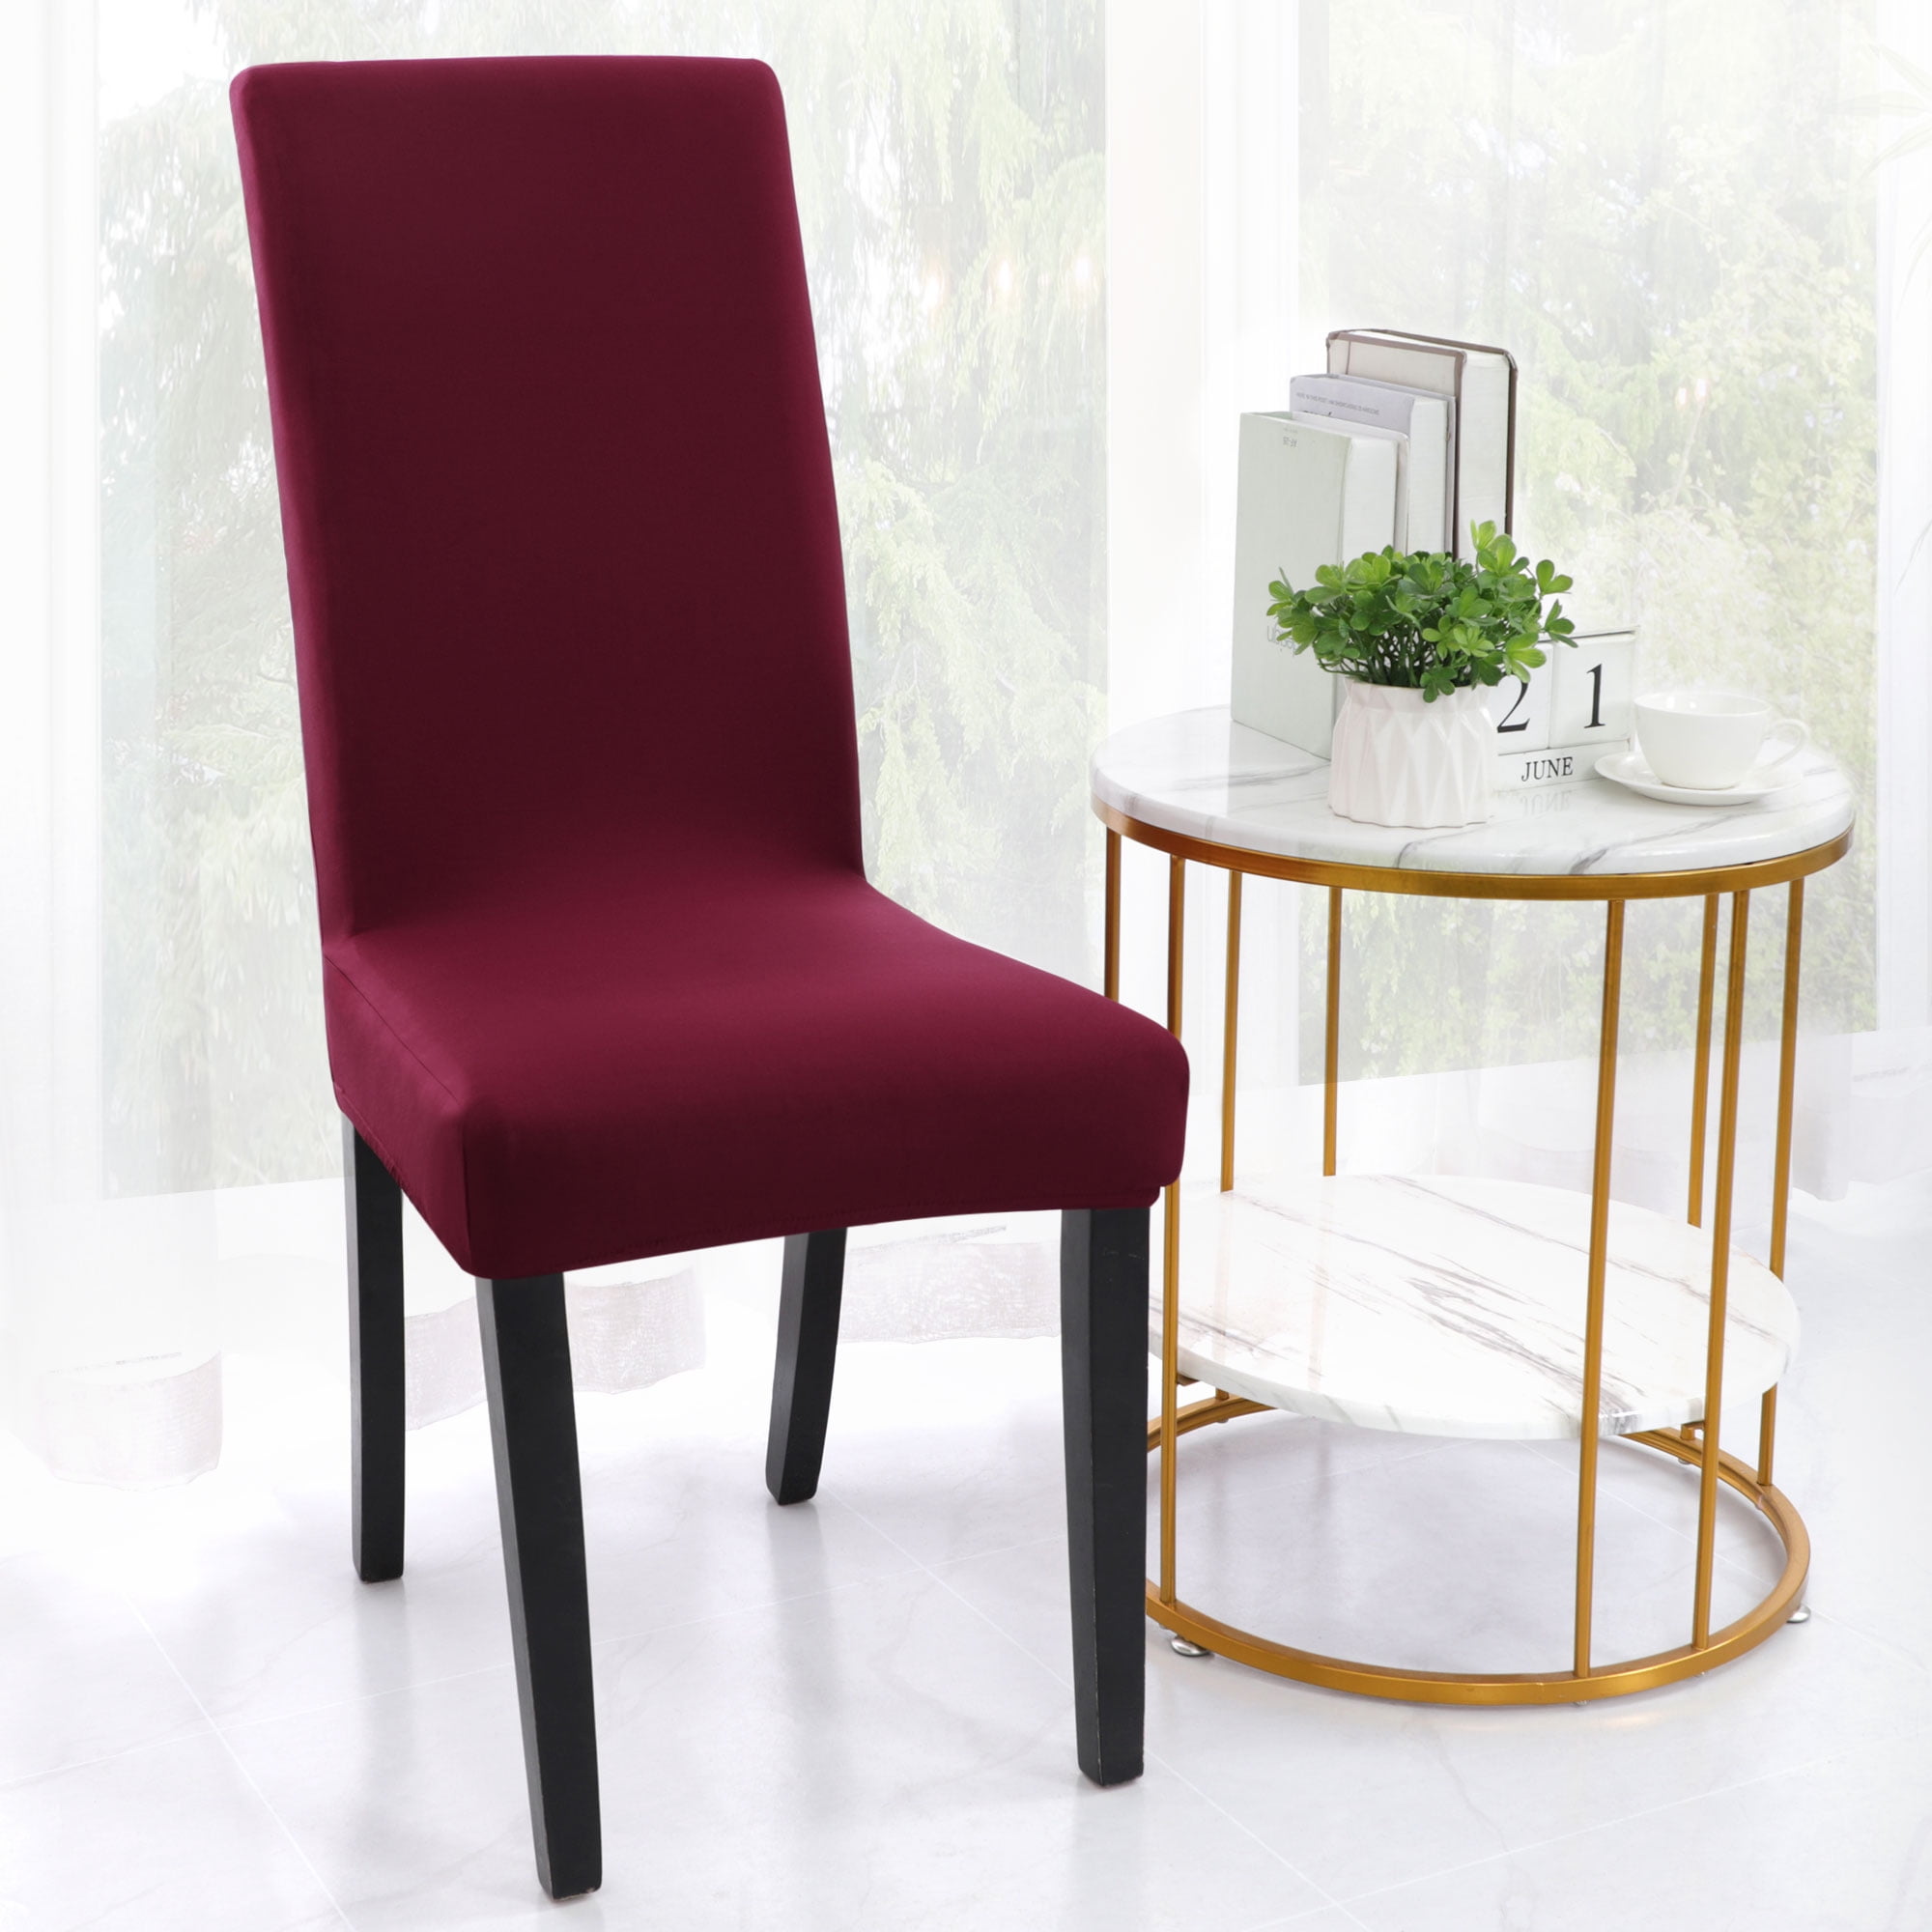 Details about   Wedding Party 10-100PCS Shiny Foil Spandex Stretch Chair Sash Chairs Décor Use 